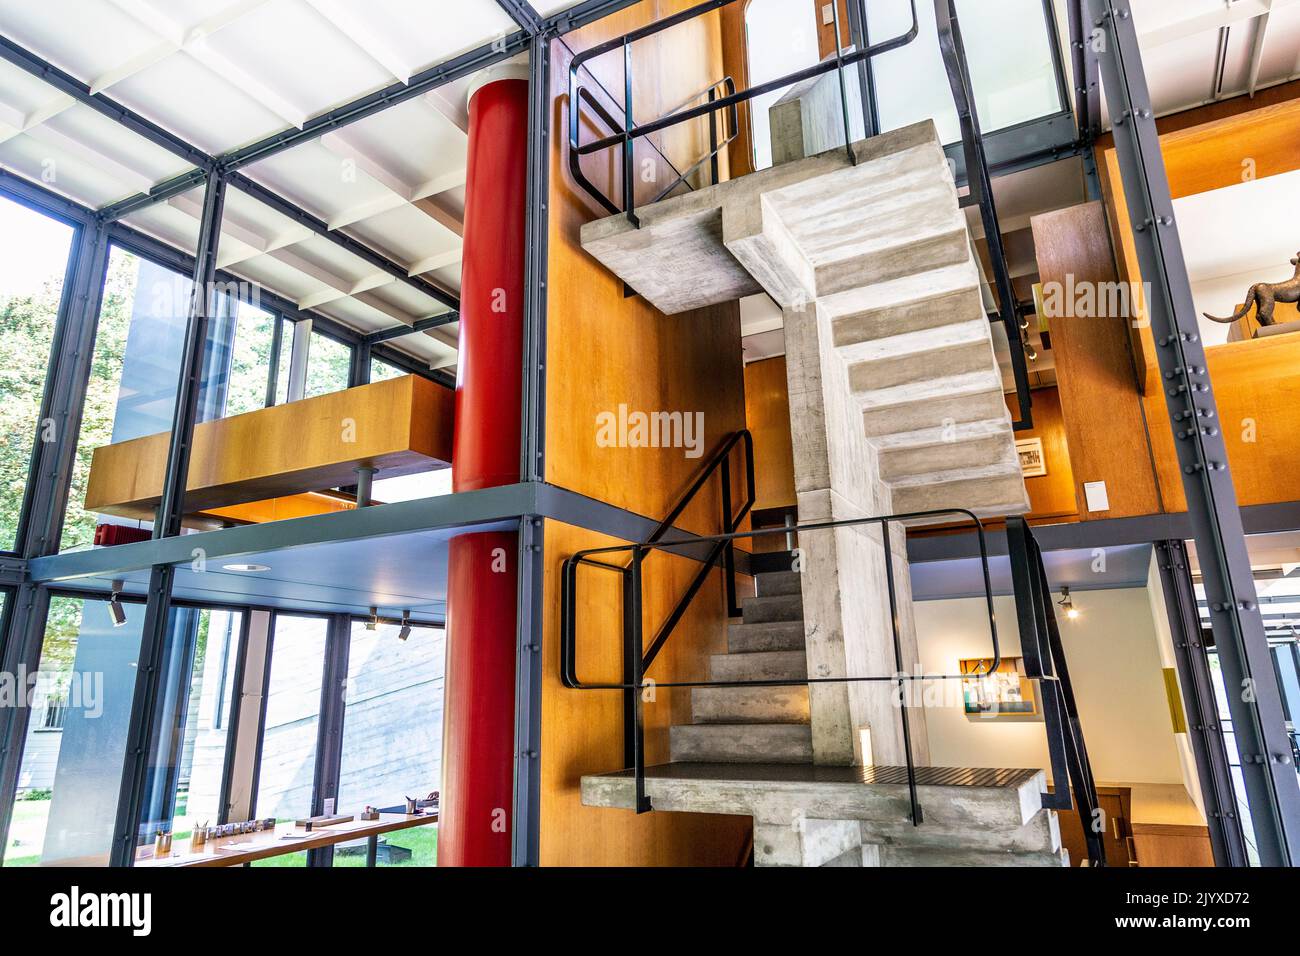 Pavillon le corbusier -Fotos und -Bildmaterial in hoher Auflösung – Alamy